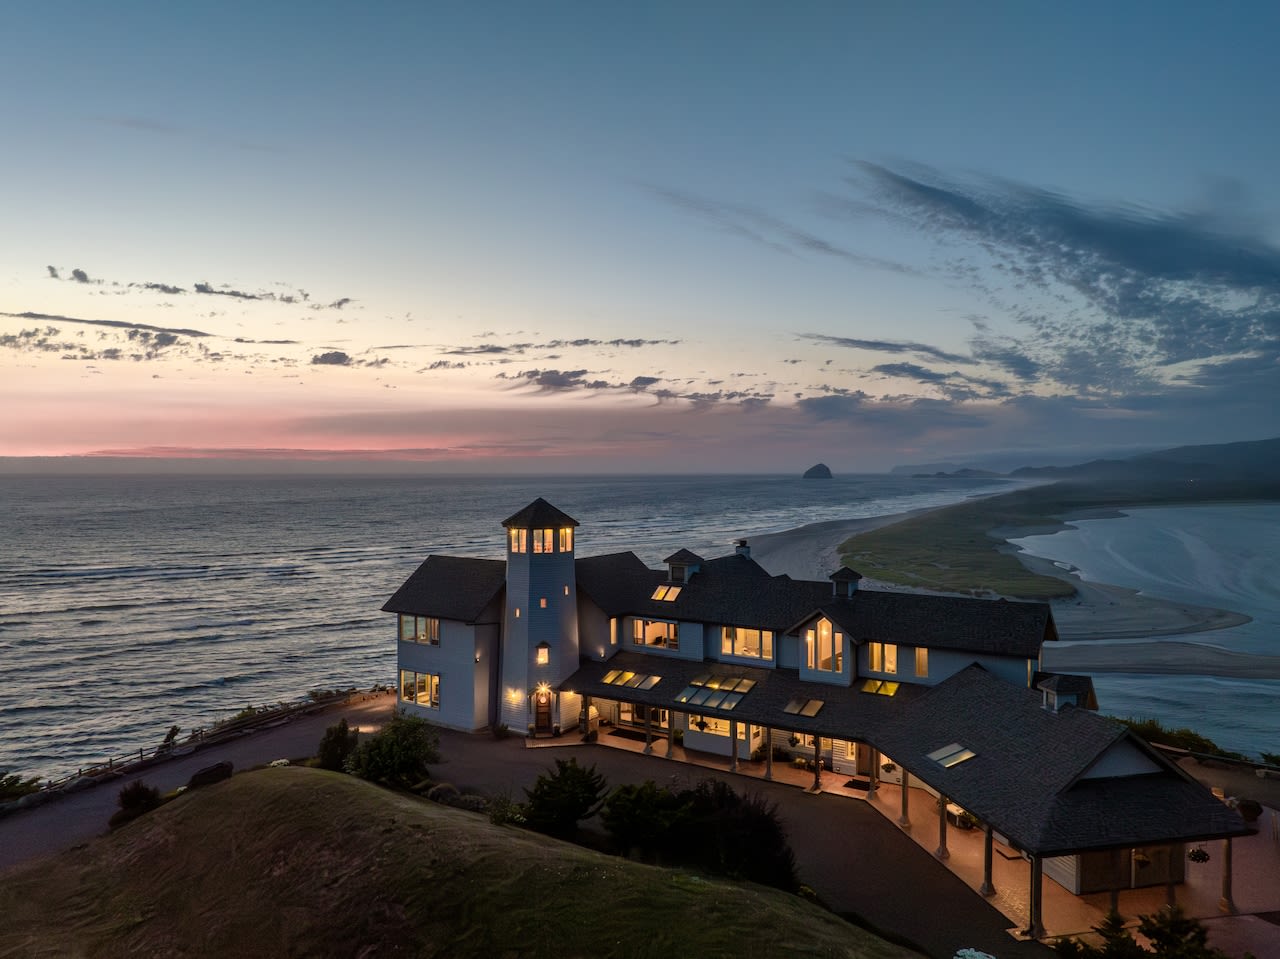 Oregon coast property listed at $10M hits the auction block with no minimum bid